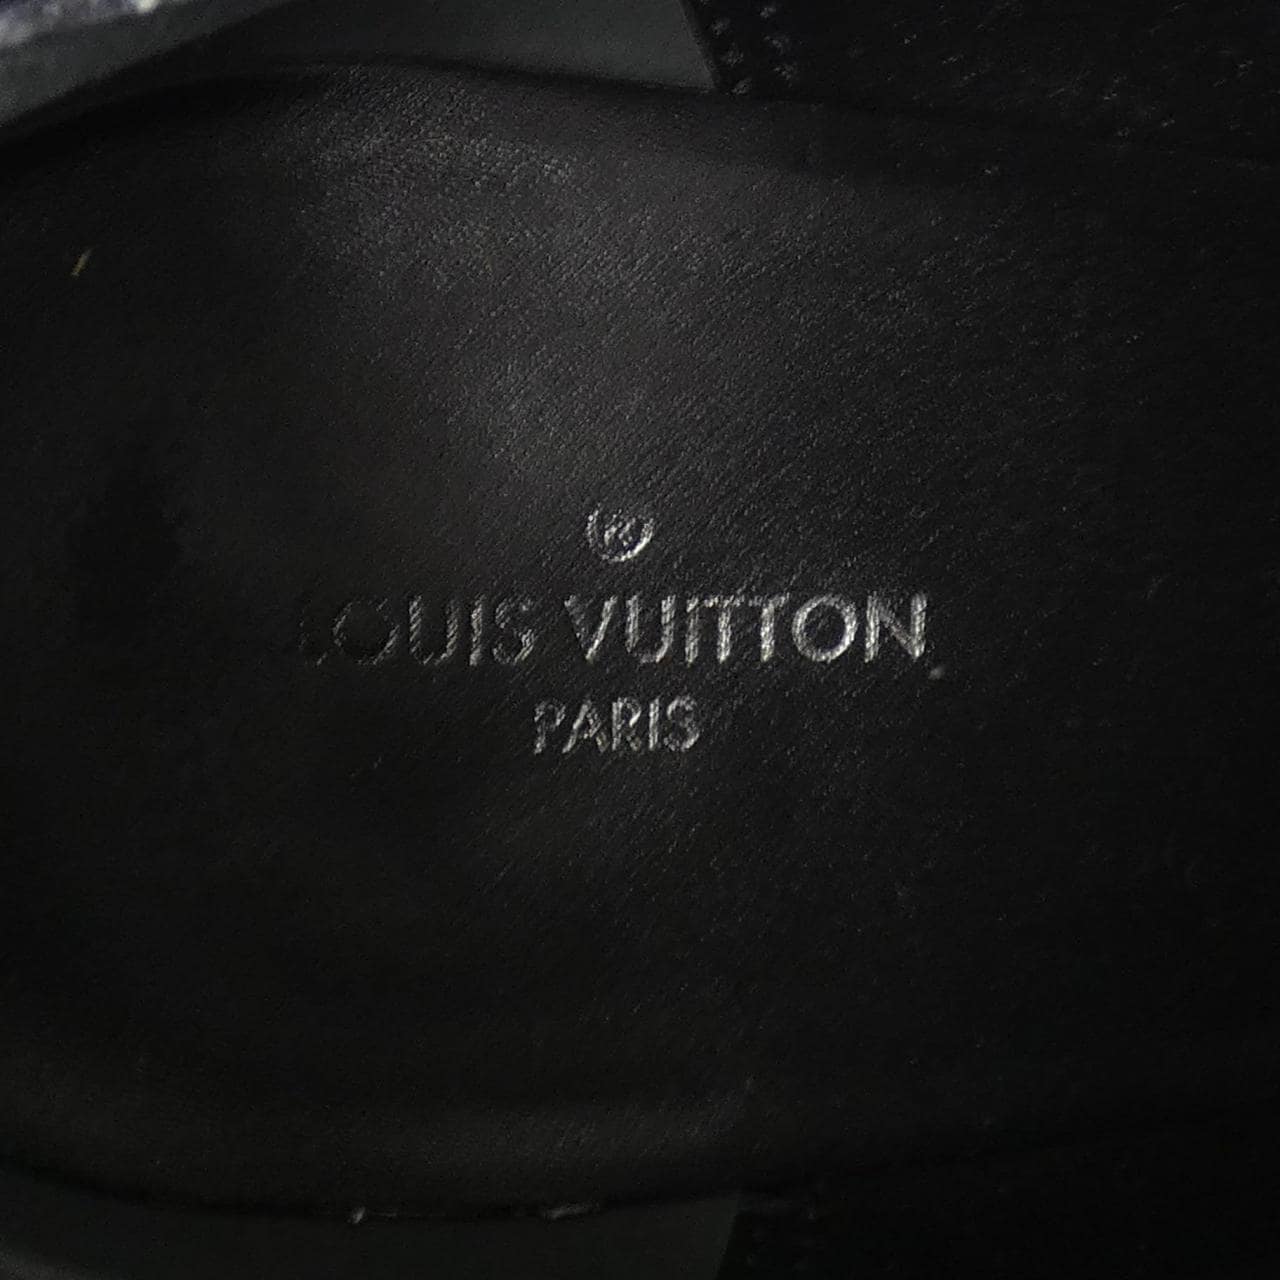 LOUIS VUITTON靴子